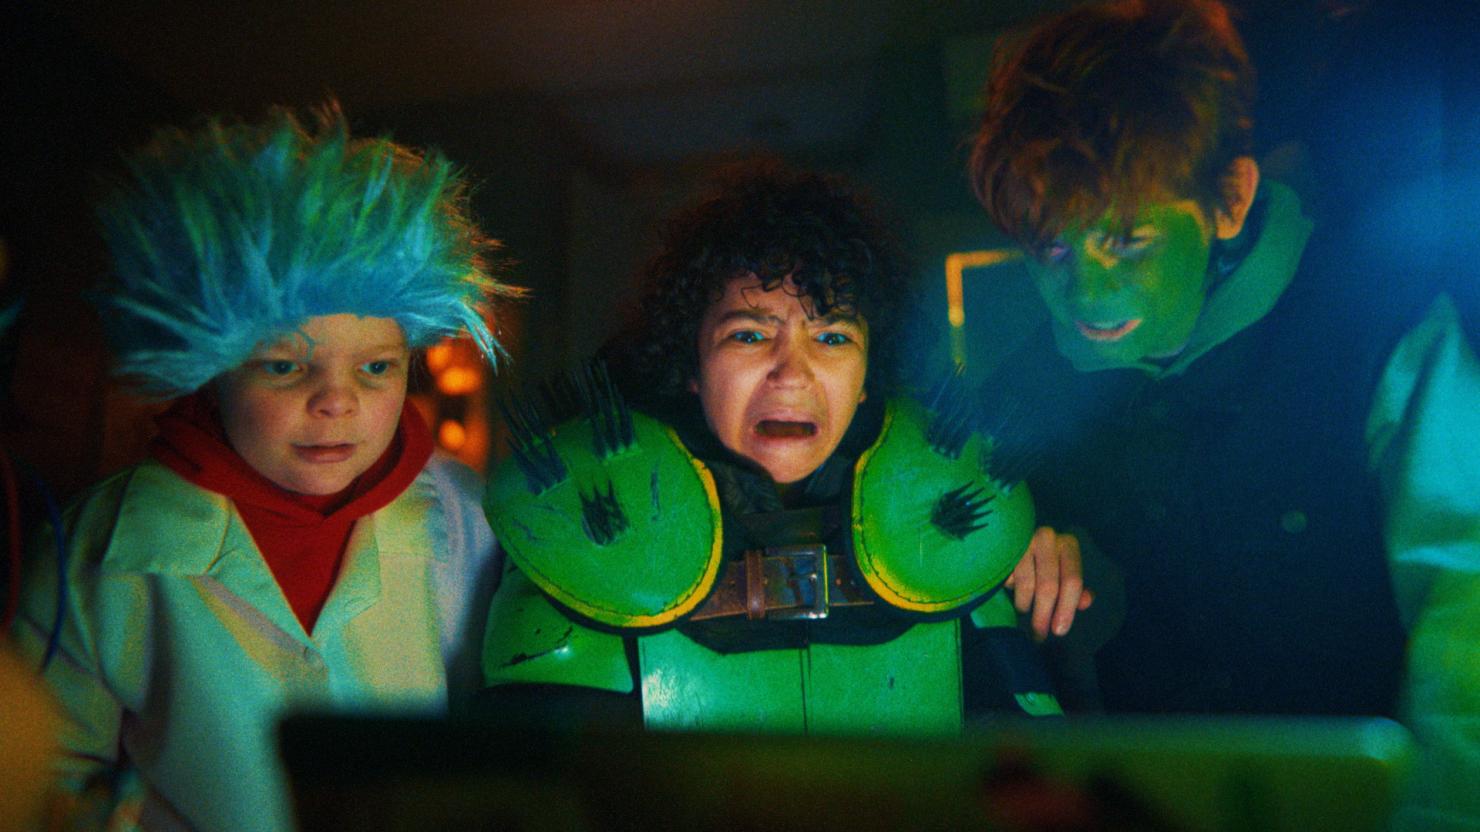 Director Jason Eisener on 'Kids vs. Aliens' and being a kid